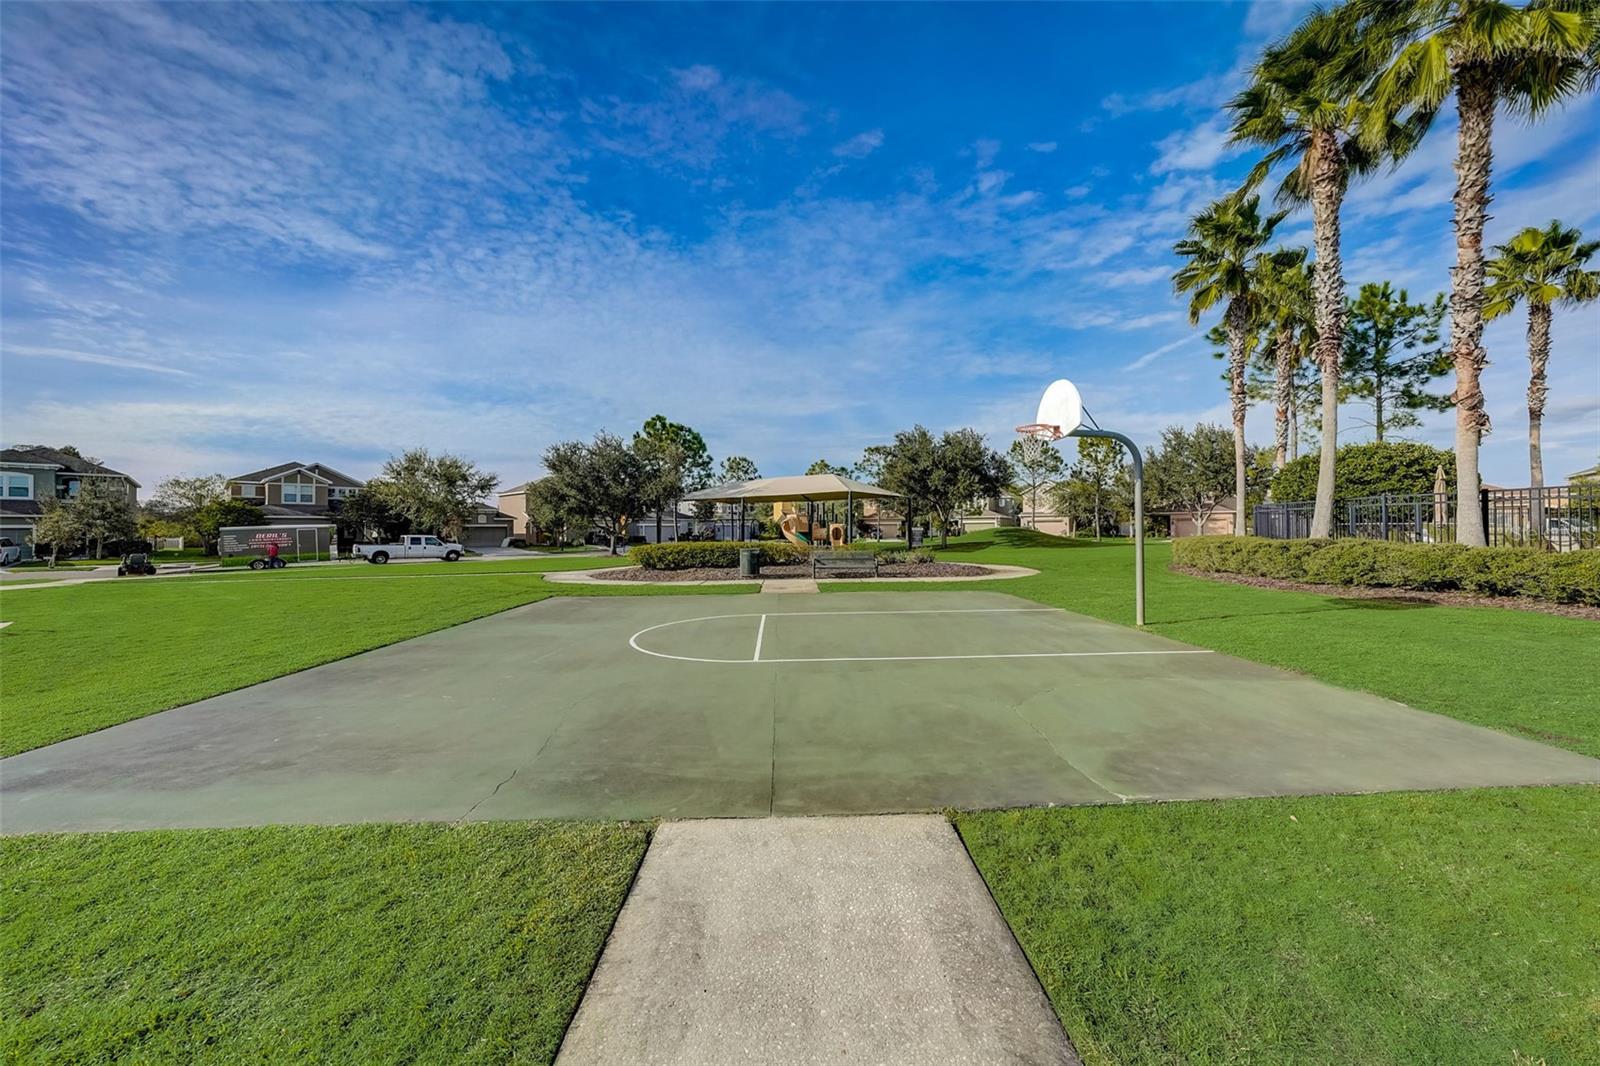 Basketball courts